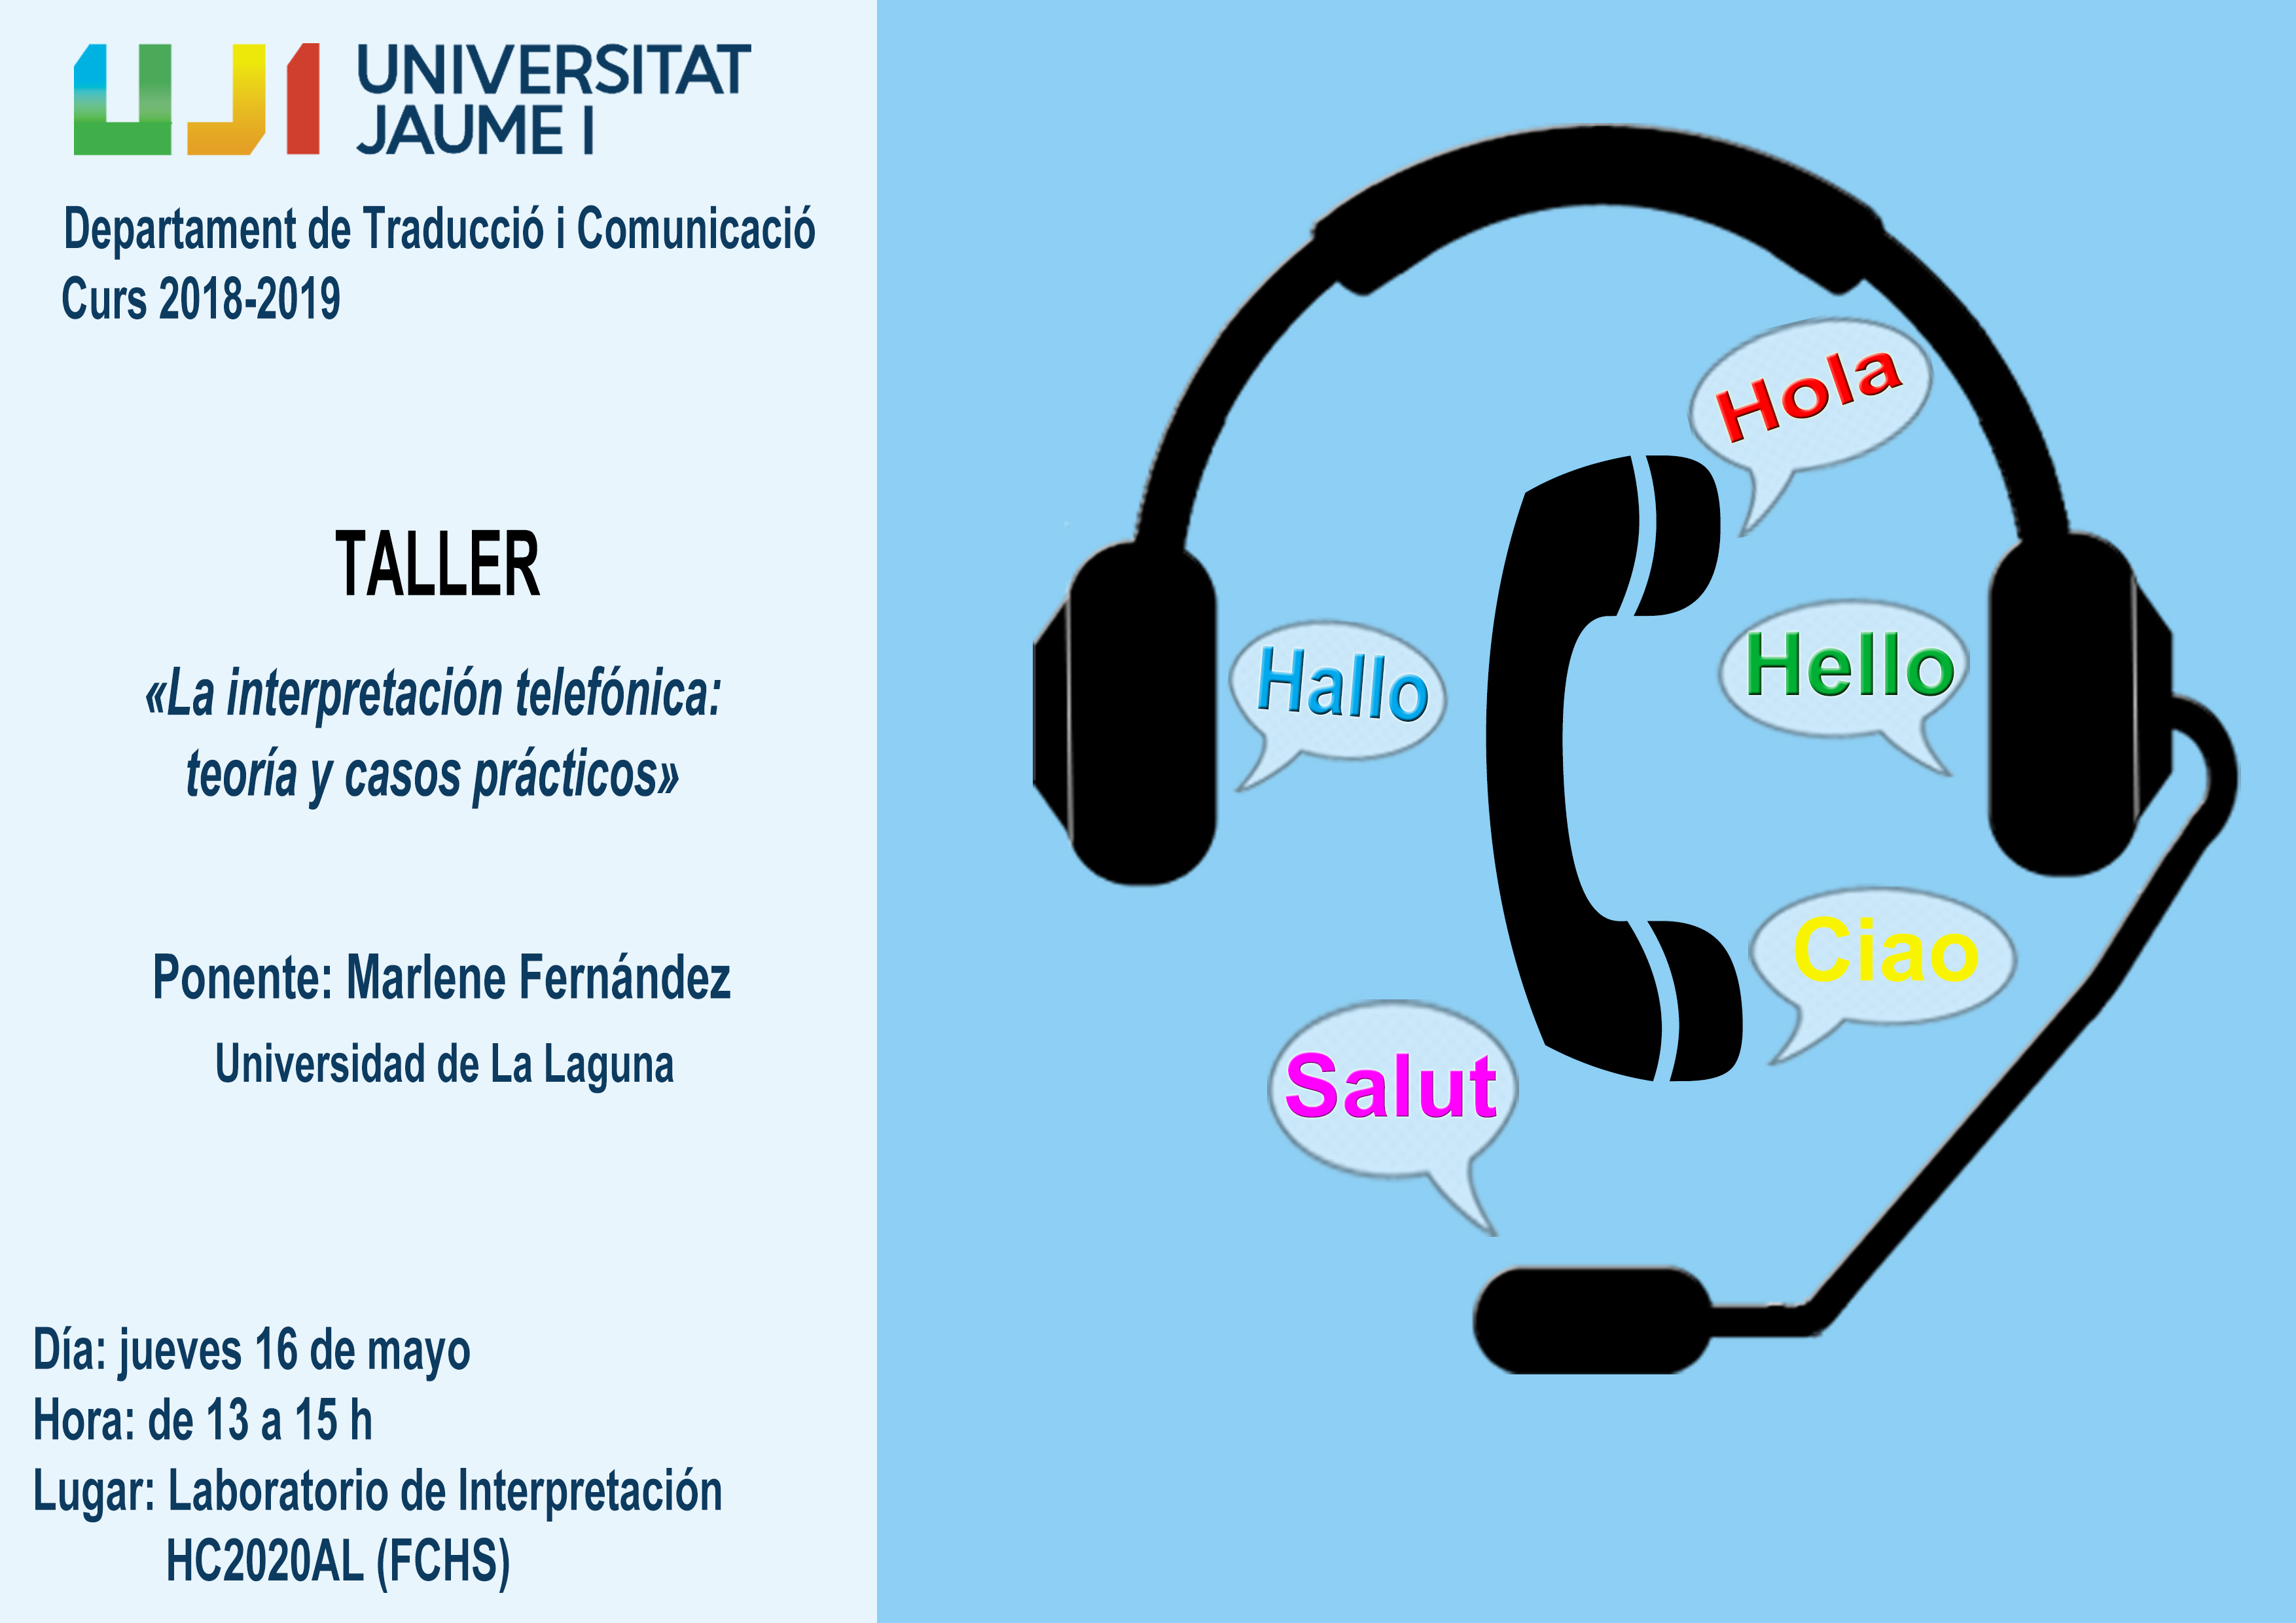  Interpretacion_Telefonica Taller_Blasco_Interpretacion_Telefonica